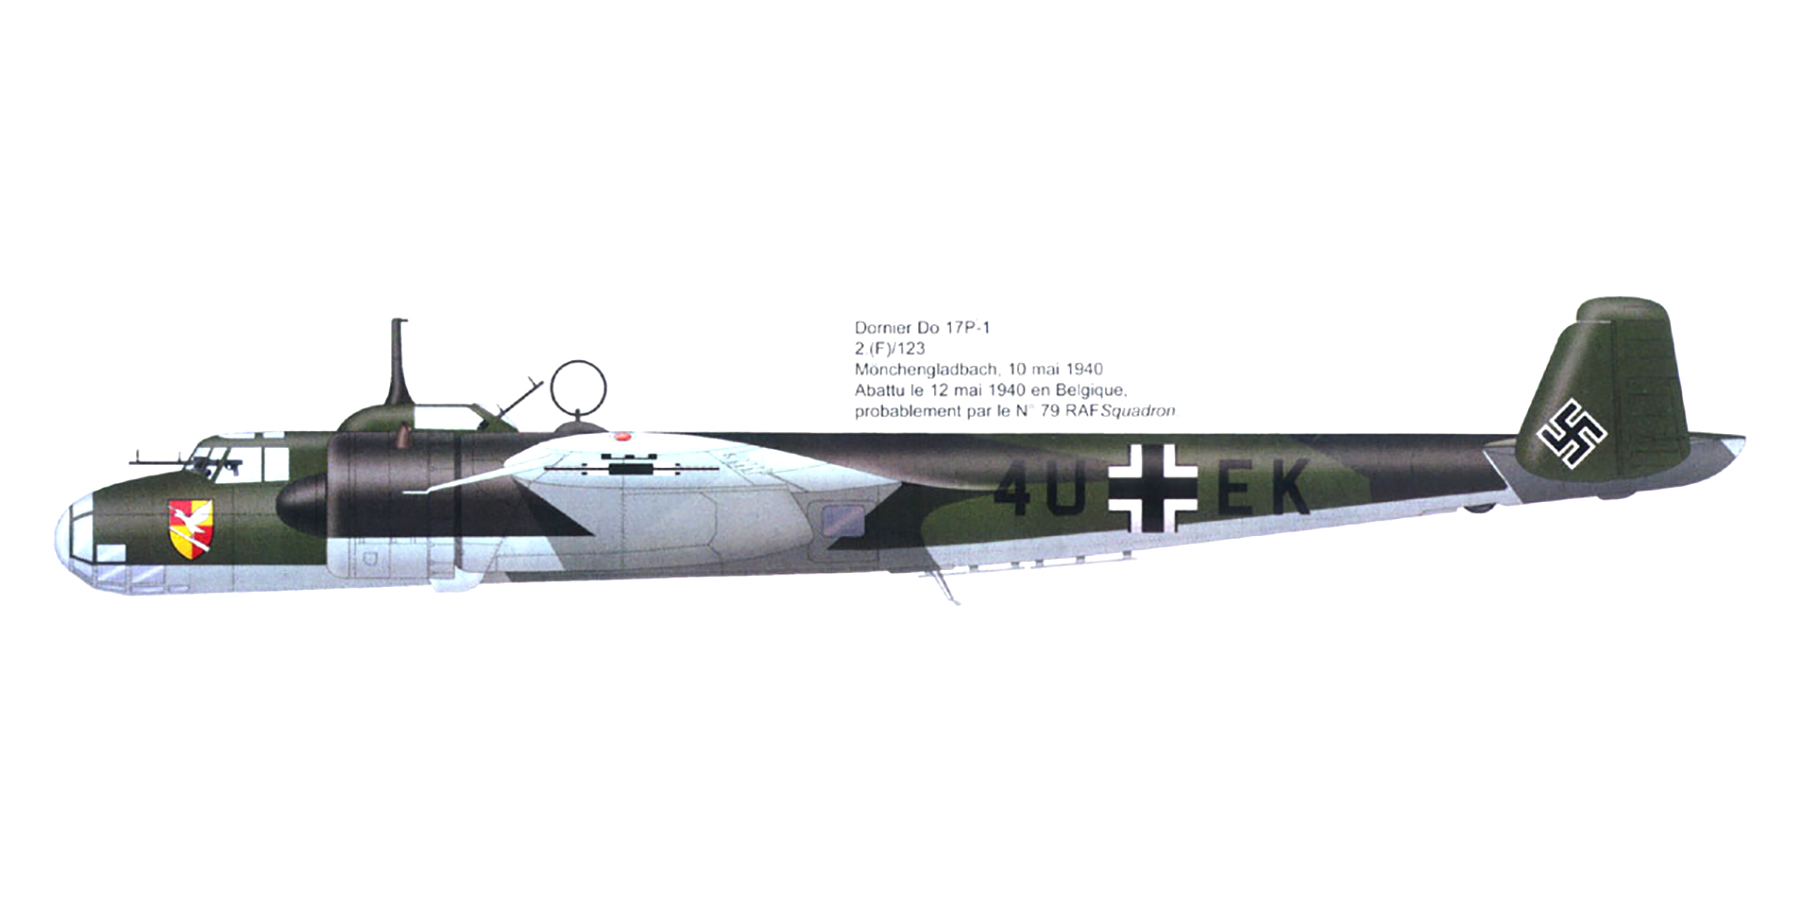 Dornier Do 17P 2.(F)123 4U+EK WNr147 downed by French MS406 crash landed Belgium May 1940 0A